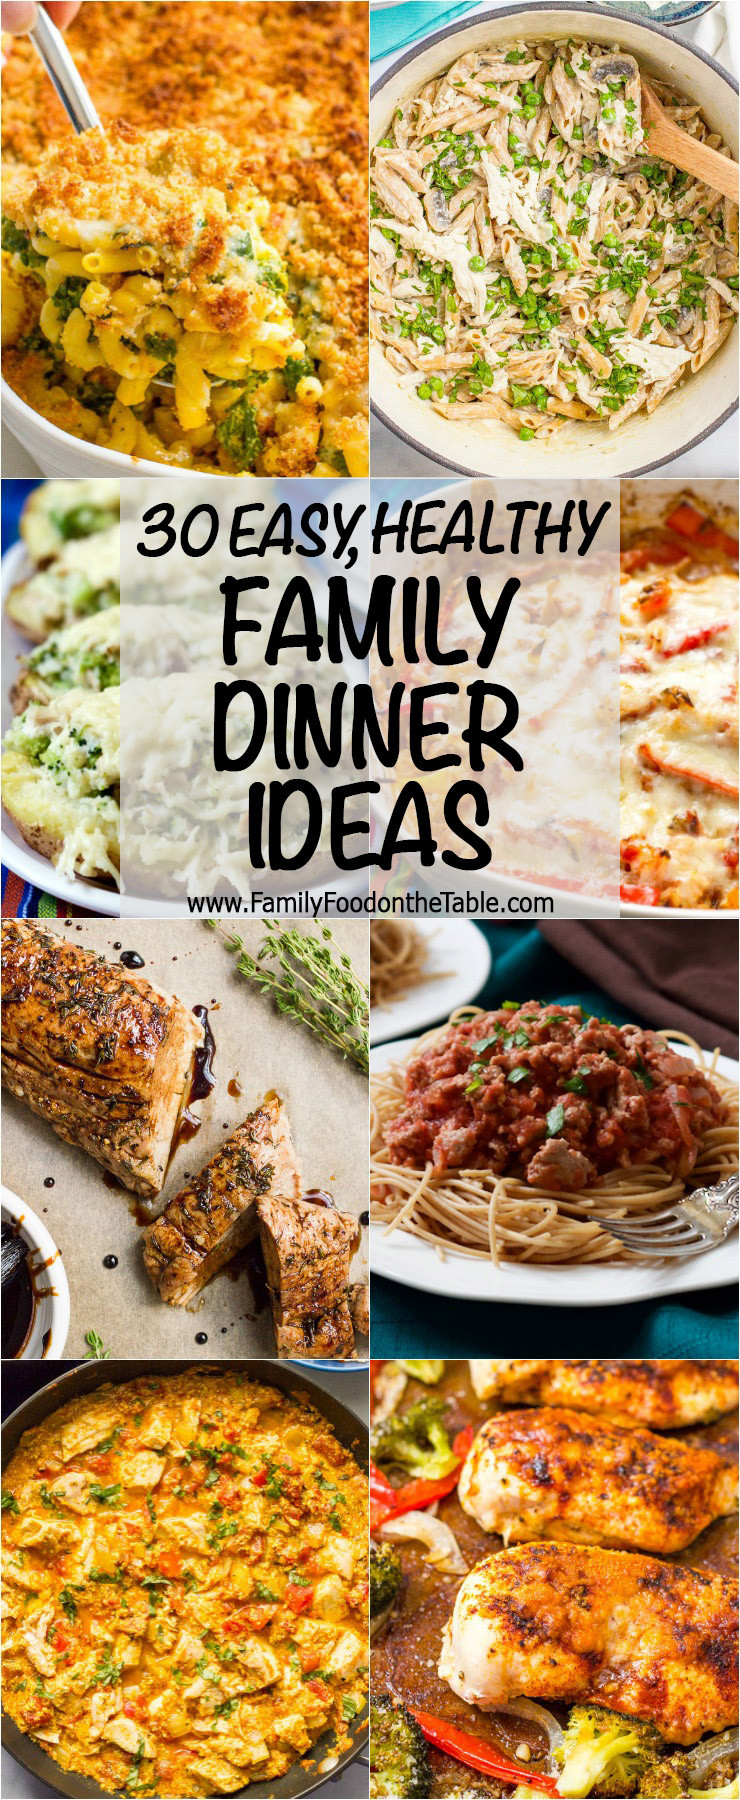 Easy Healthy Dinner Recipes Kid Friendly
 30 easy healthy family dinner ideas Family Food on the Table